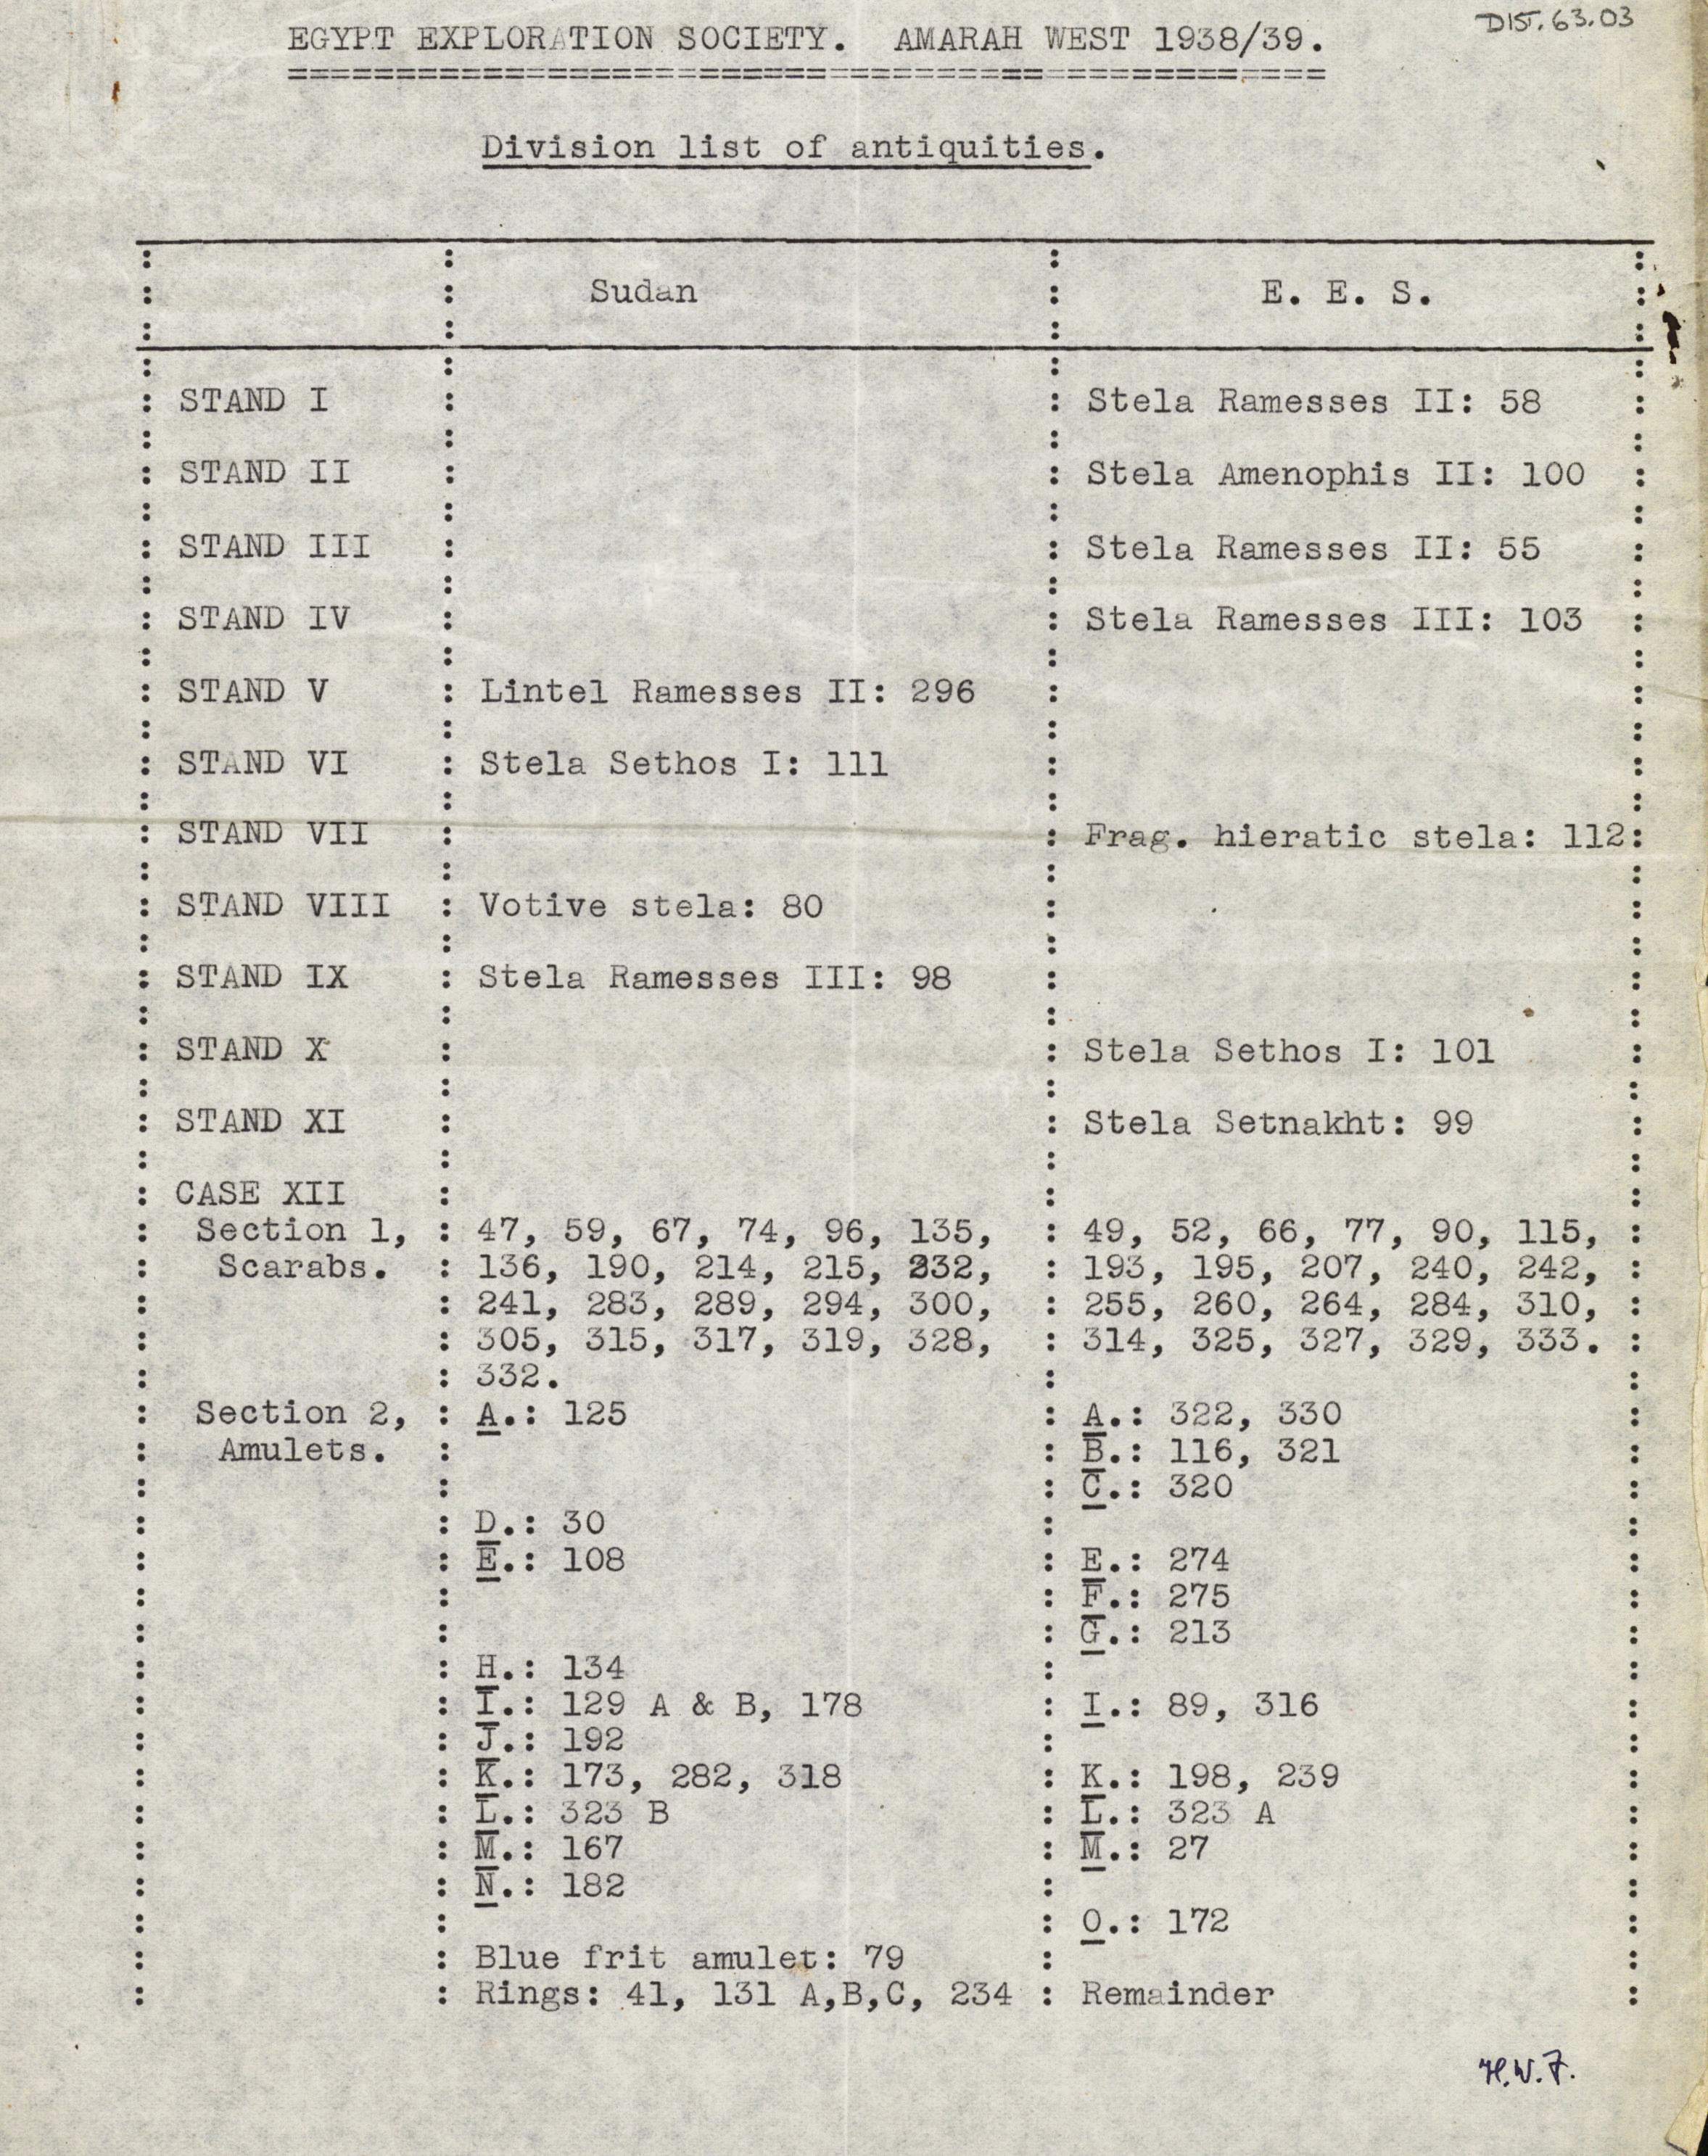 1936-39 Amarah West, Sesebi DIST.63.03a